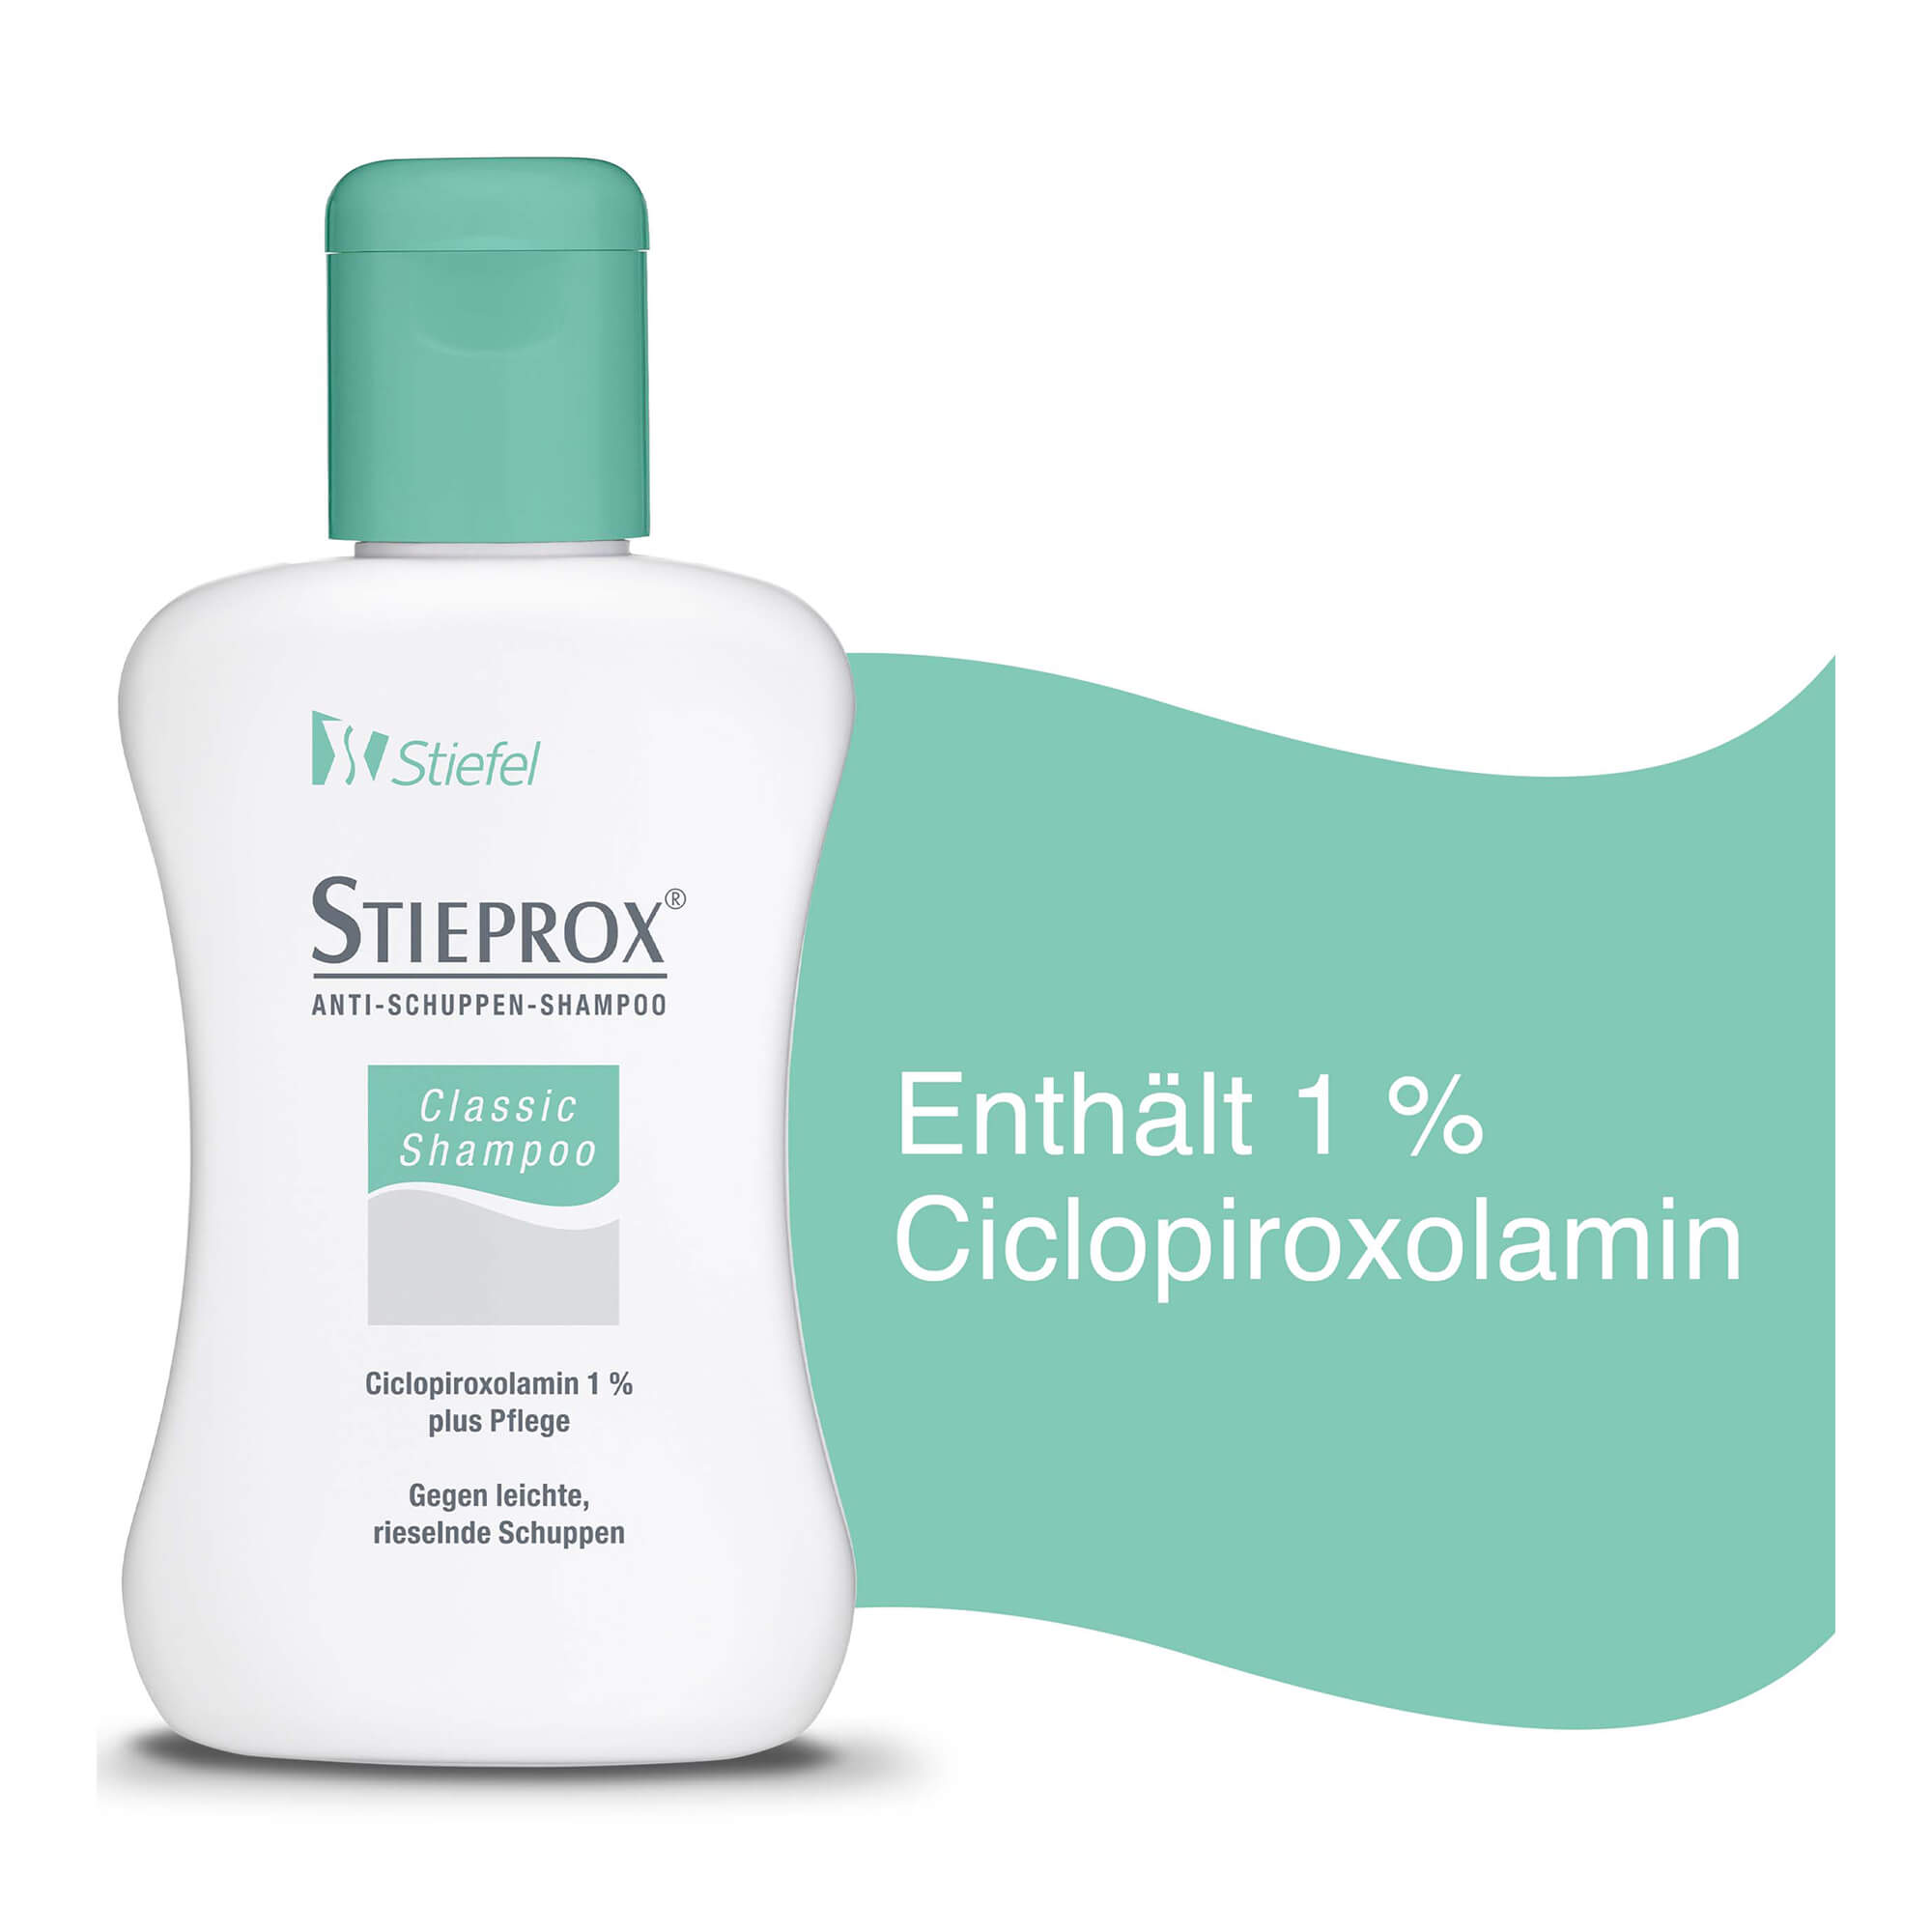 Grafik Stieprox Classic Shampoo Enthält 1% Ciclopiroxolamin